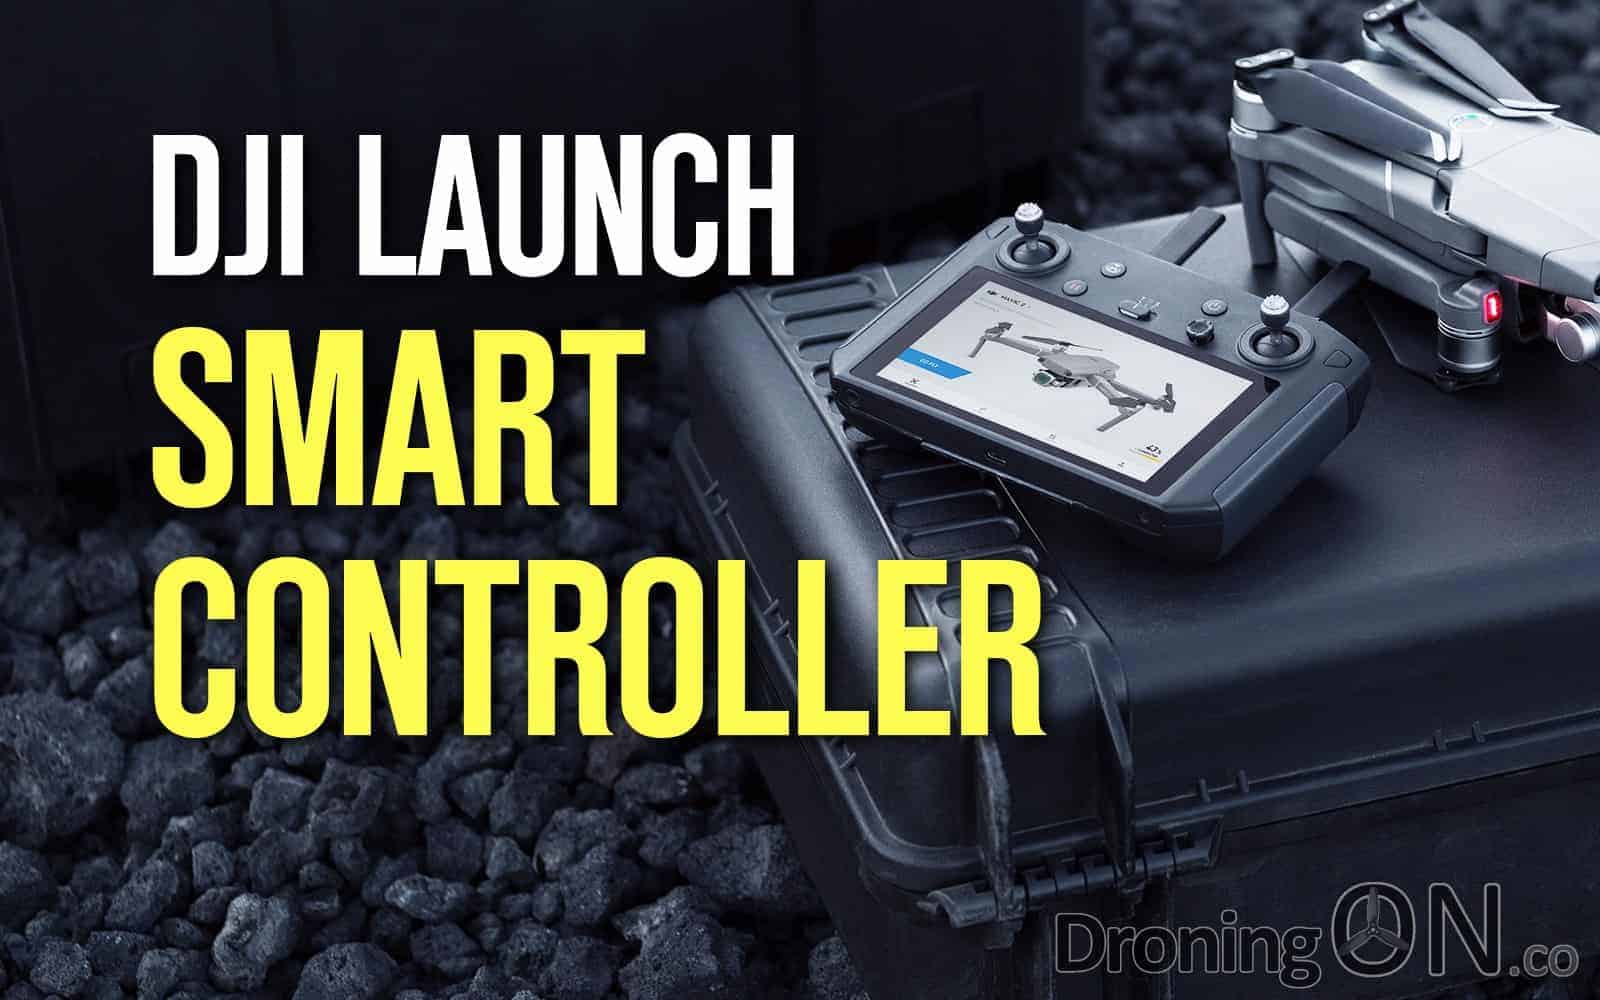 DJI Smart Controller for the DJI Mavic drone range.